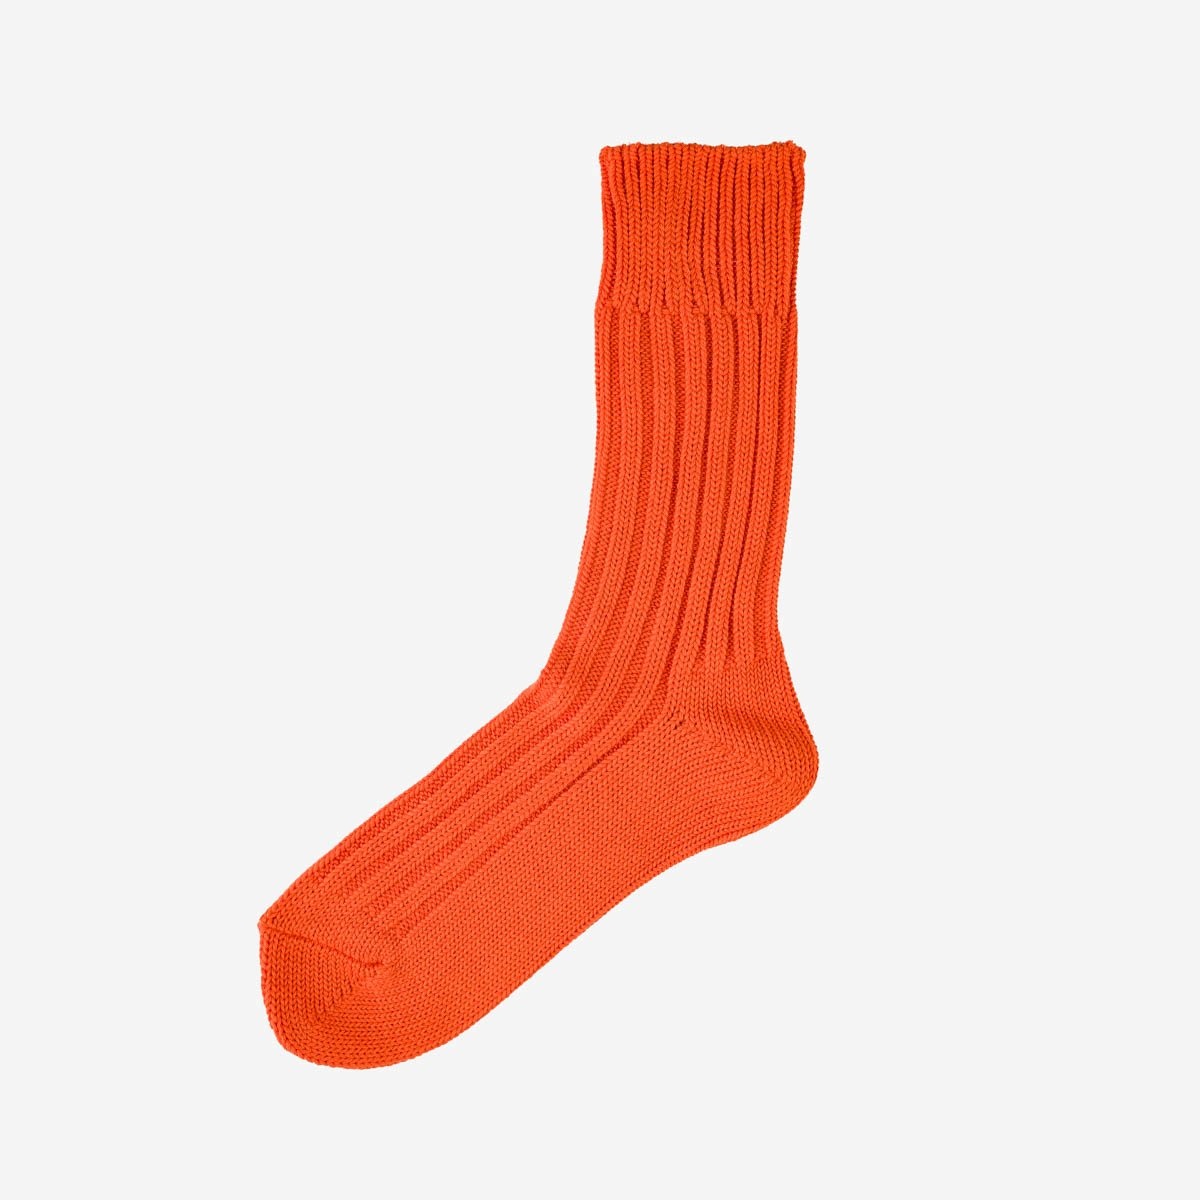 DEC-CAS-N-ORA Decka Cased Heavyweight Plain Socks - Neon Orange - 2